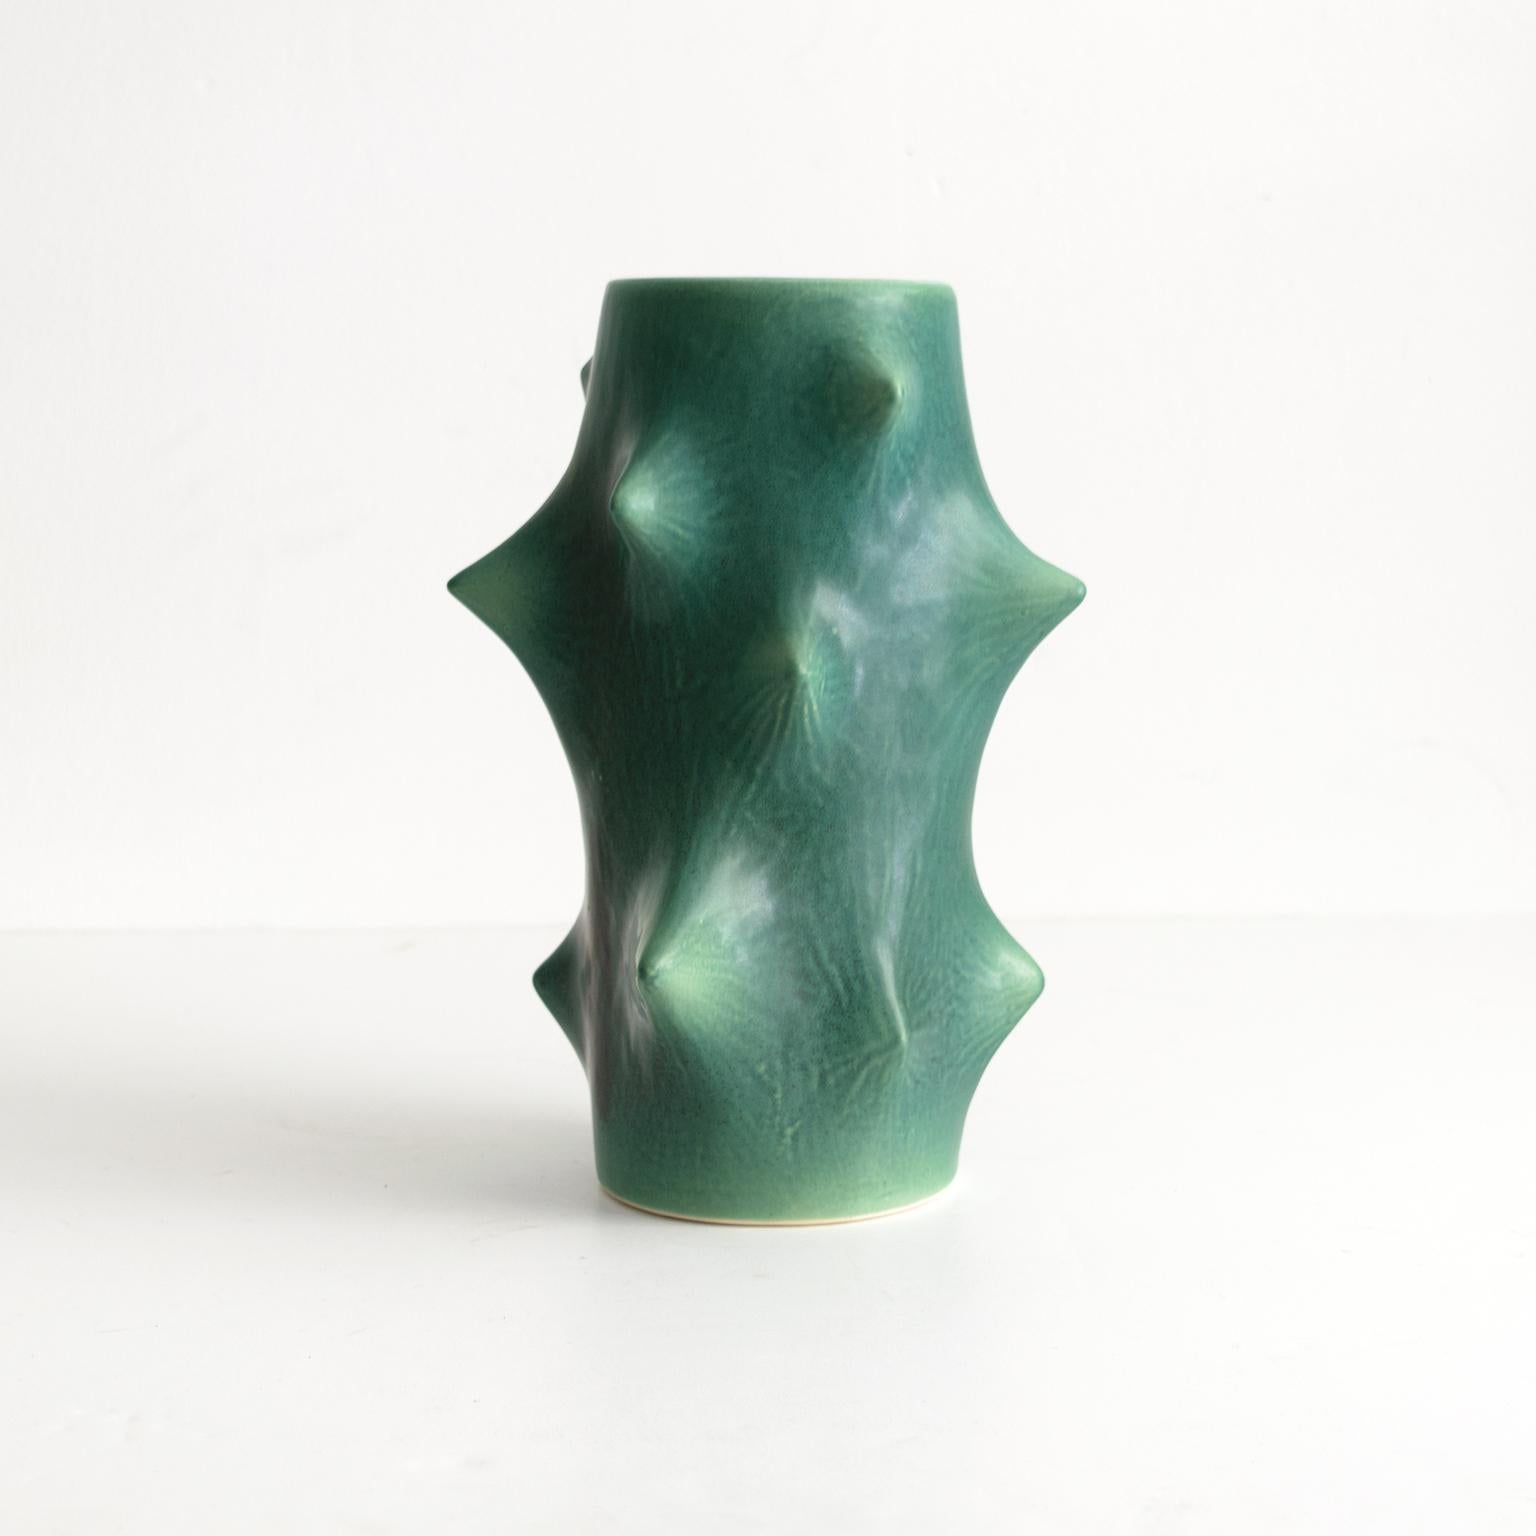 Scandinavian Modern ceramic vase by Knud Basse for Michael Andersen & Sons. This 